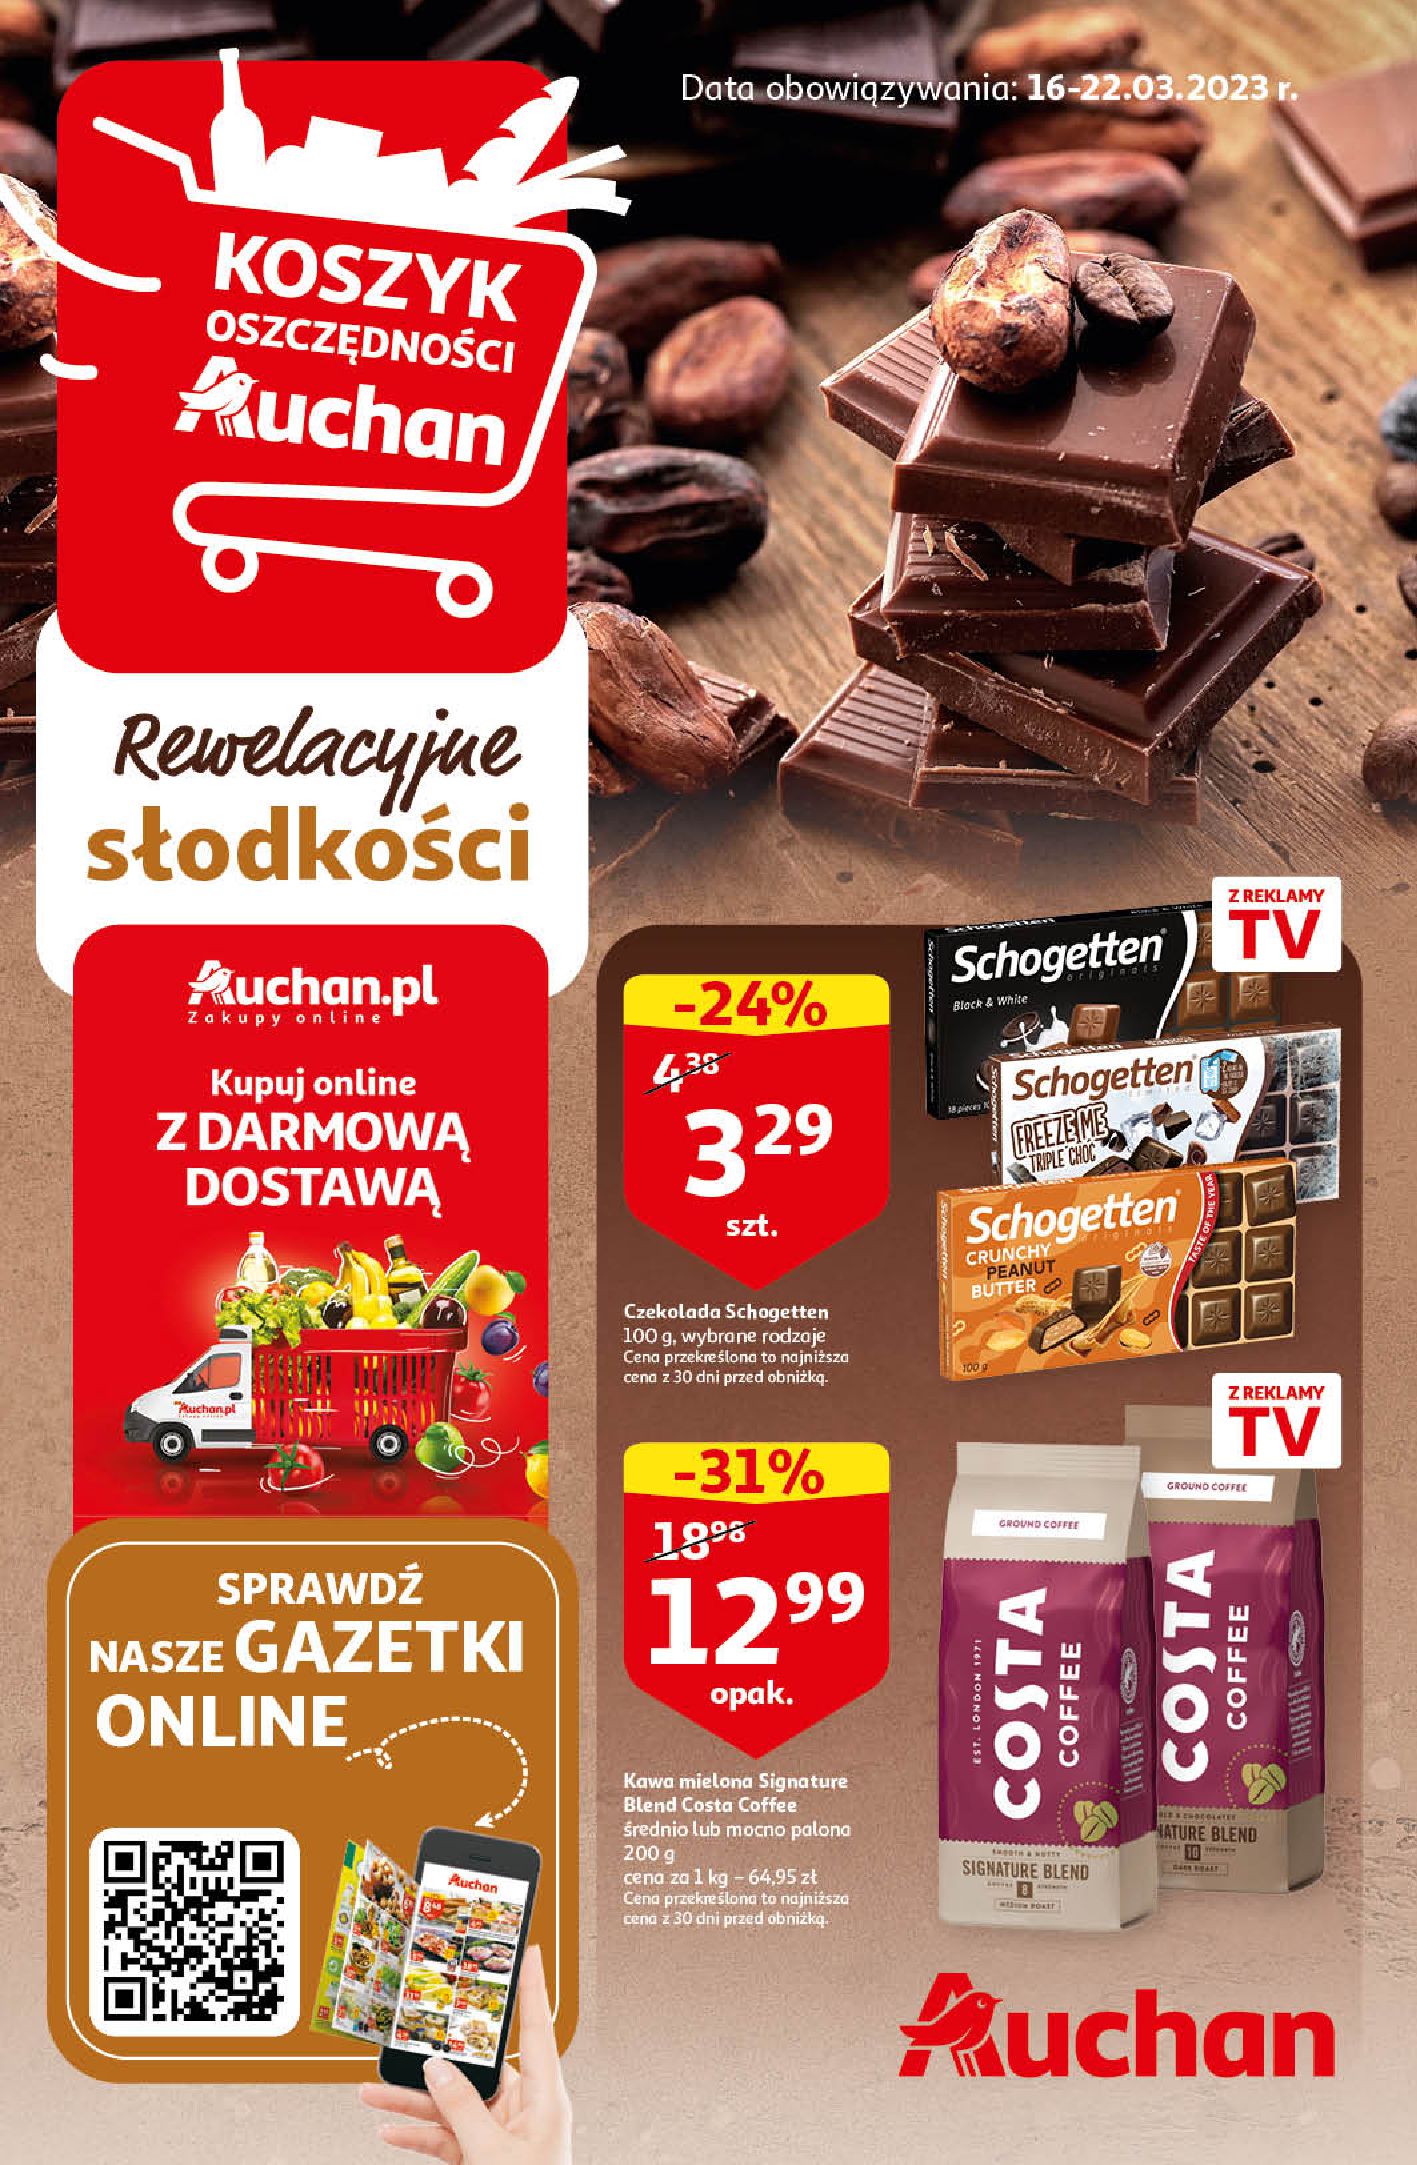 Auchan:  Gazetka Auchan do 22.03. 15.03.2023